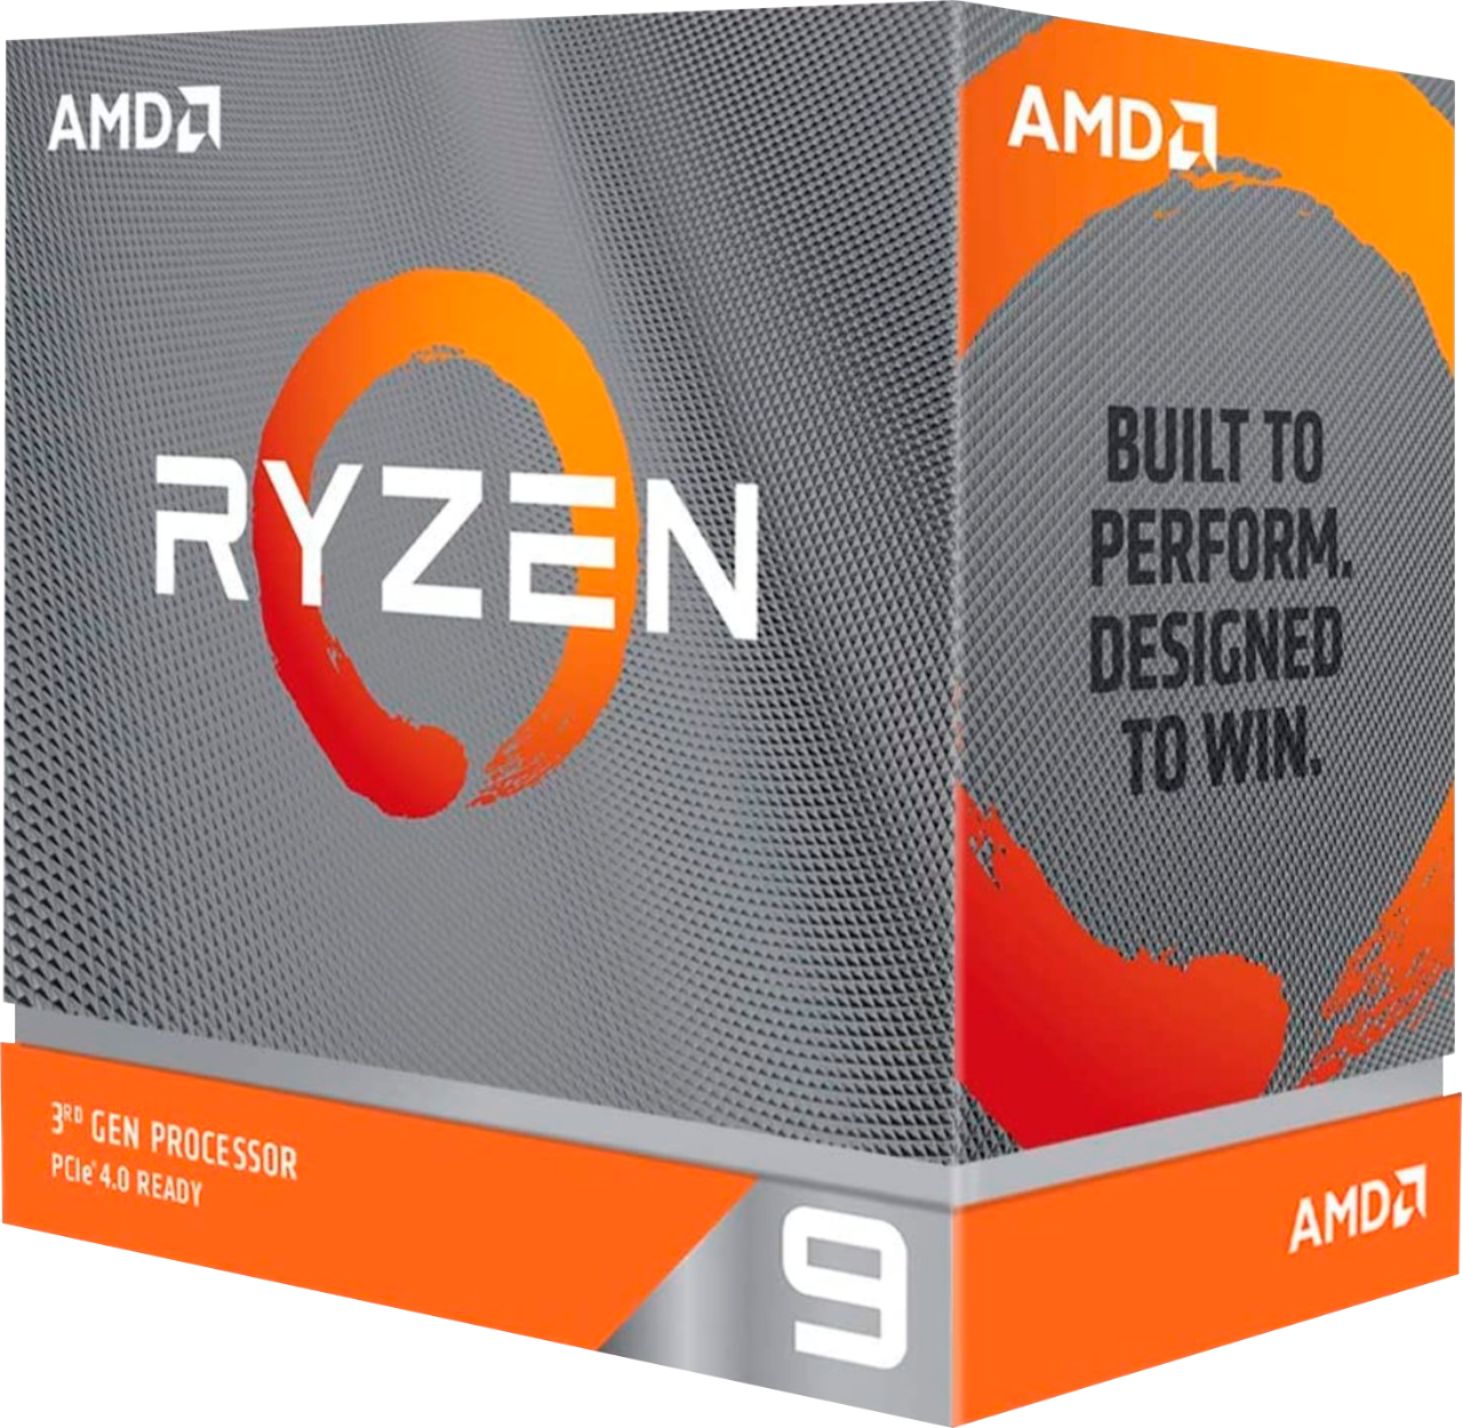 24-Threads Unlocked Desktop Processor Without Cooler AMD Ryzen 9 3900XT 12-core